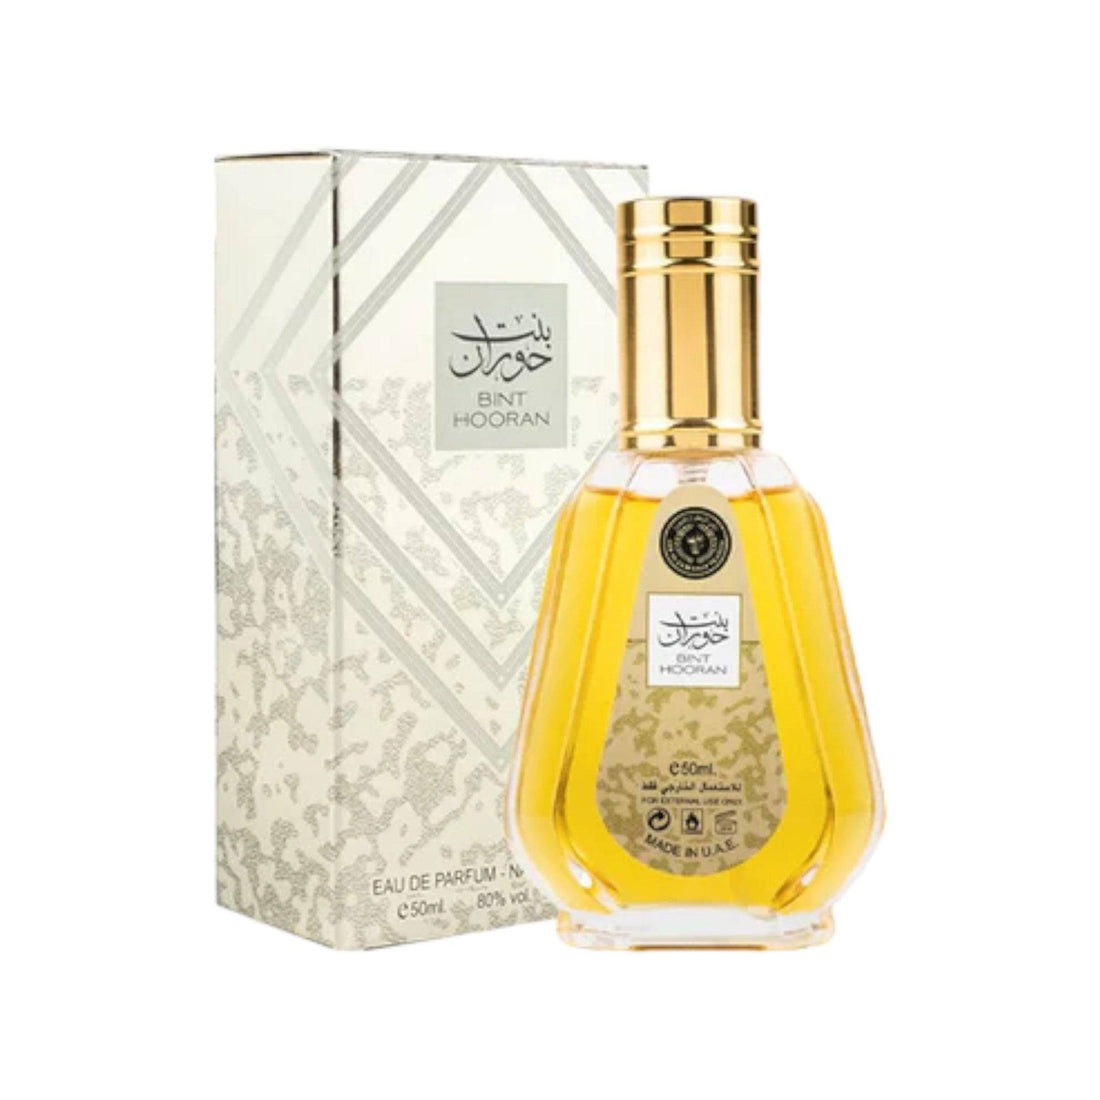 Bint Hooran 50ml EDP bottle by Ard Al Zaafaran, featuring oriental notes of Oudh, bergamot, and sandalwood in a stunning design.